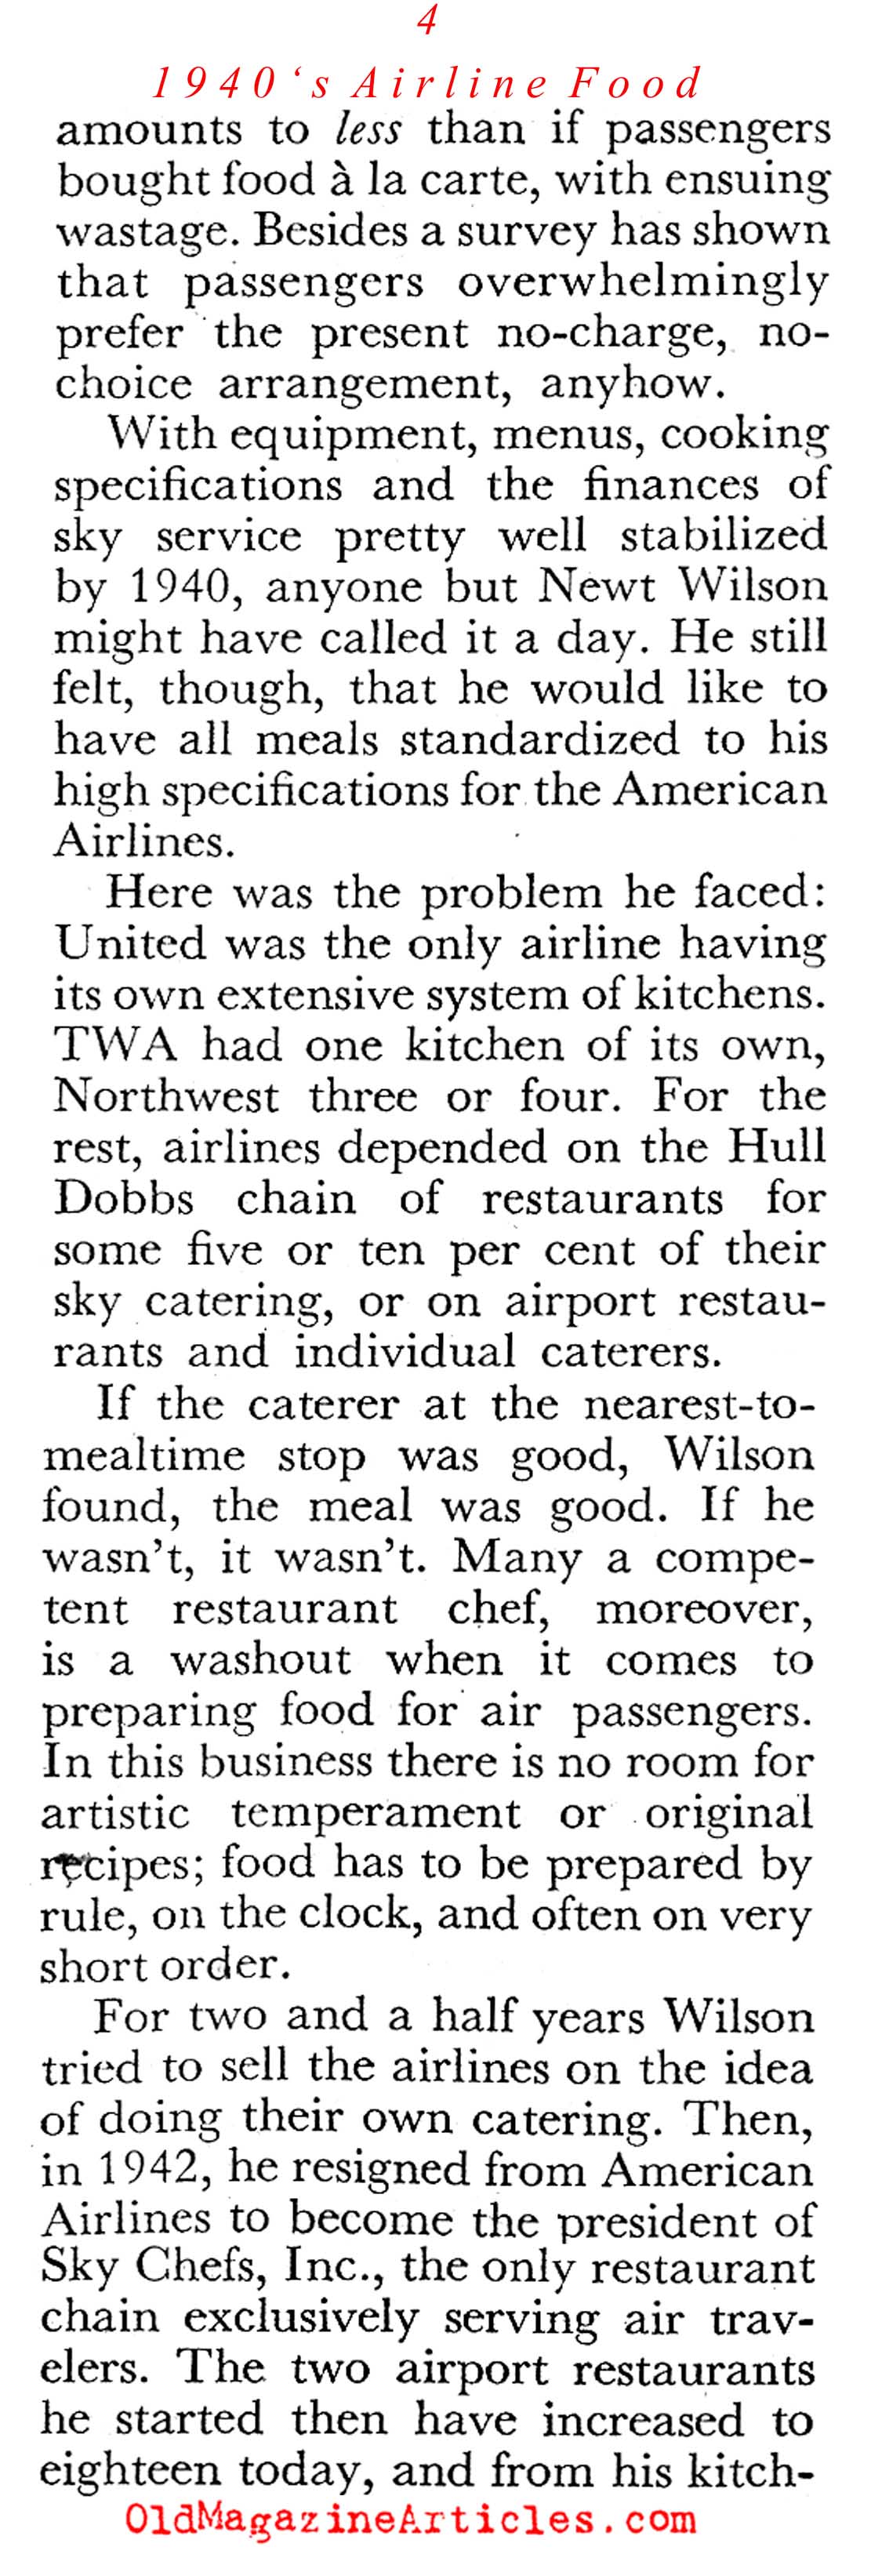 The Birth of Airline Food (Coronet Magazine, 1945)